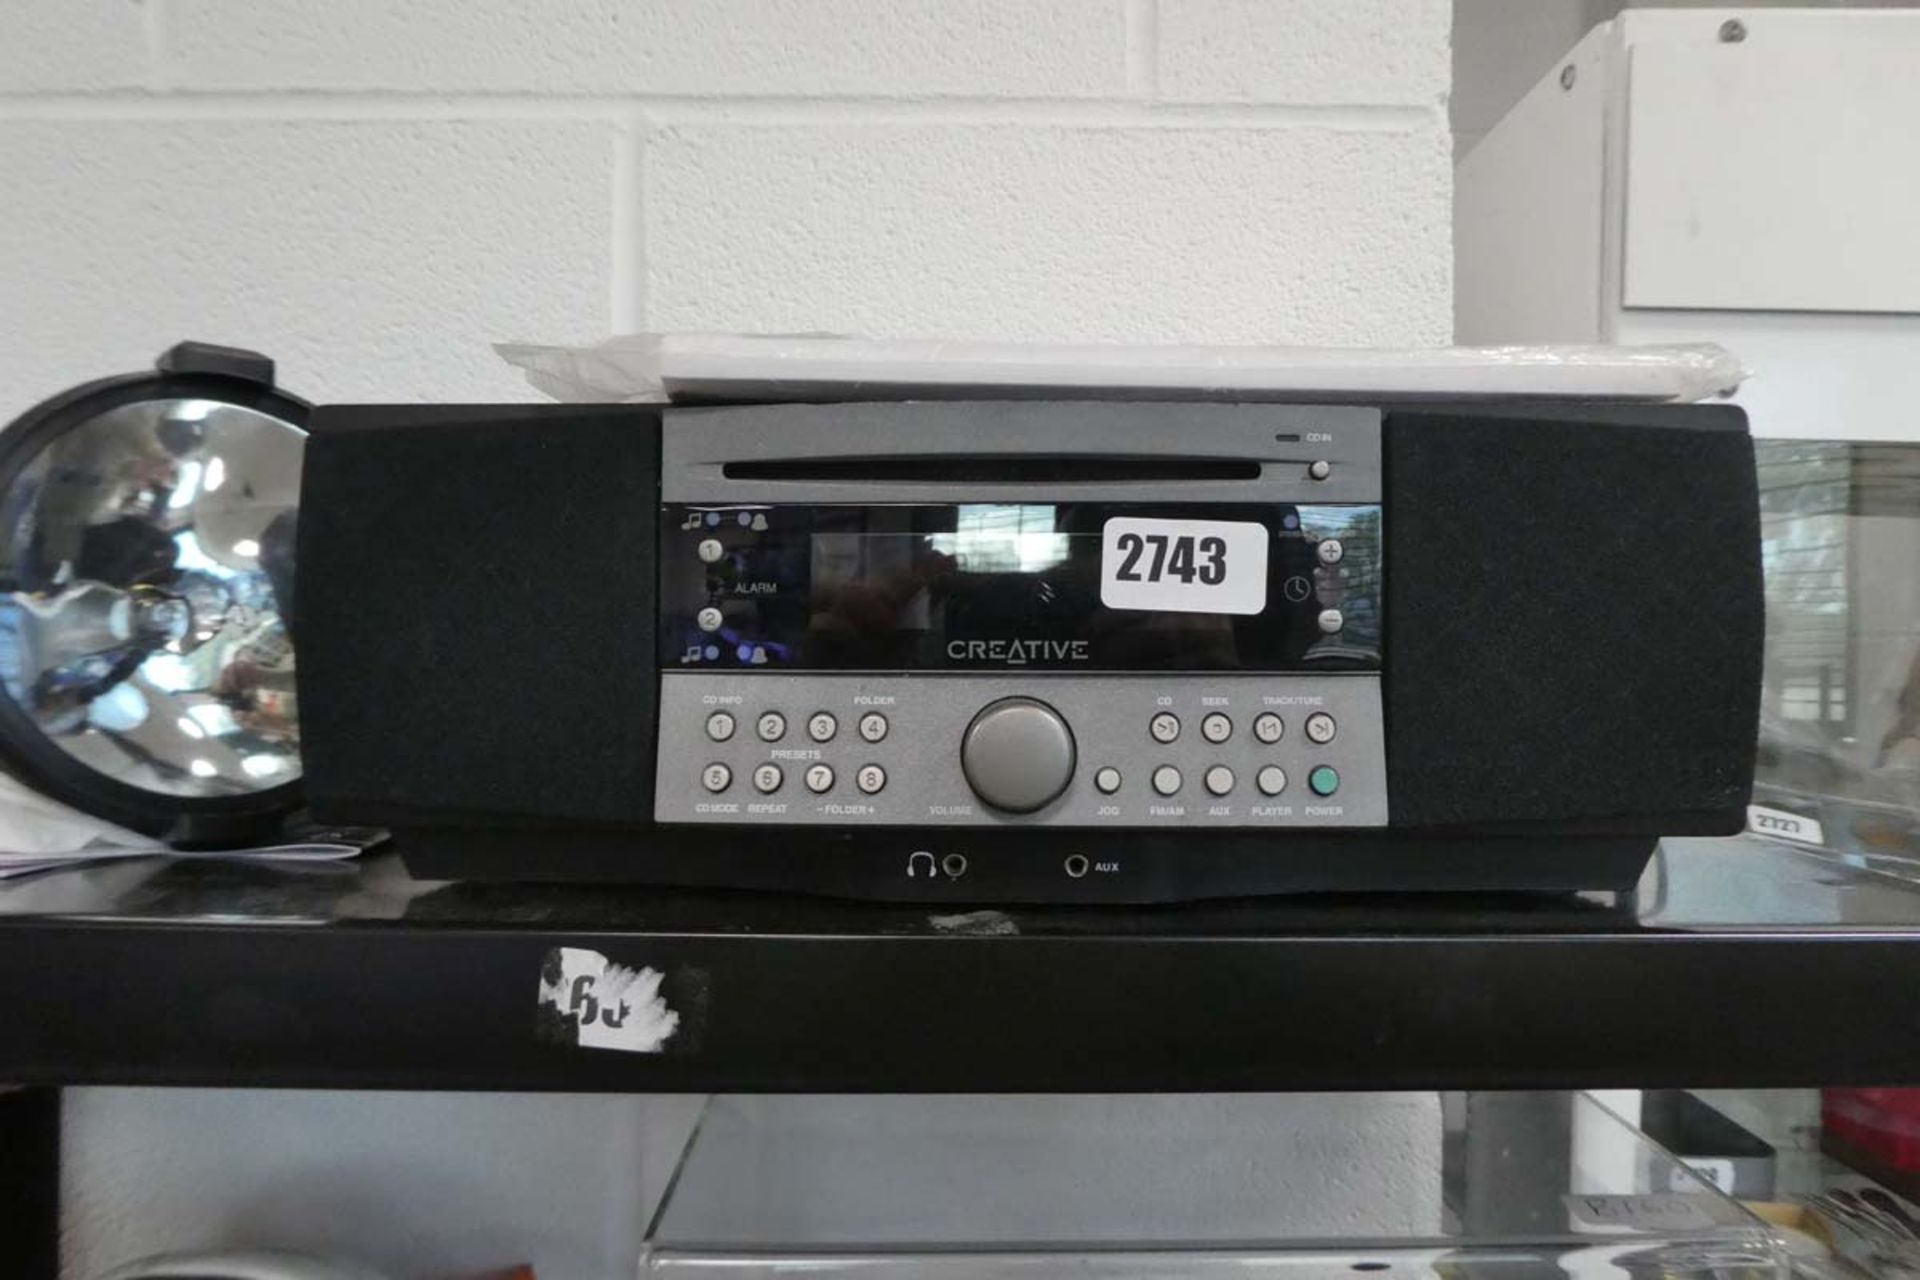 Creative CD player radio system